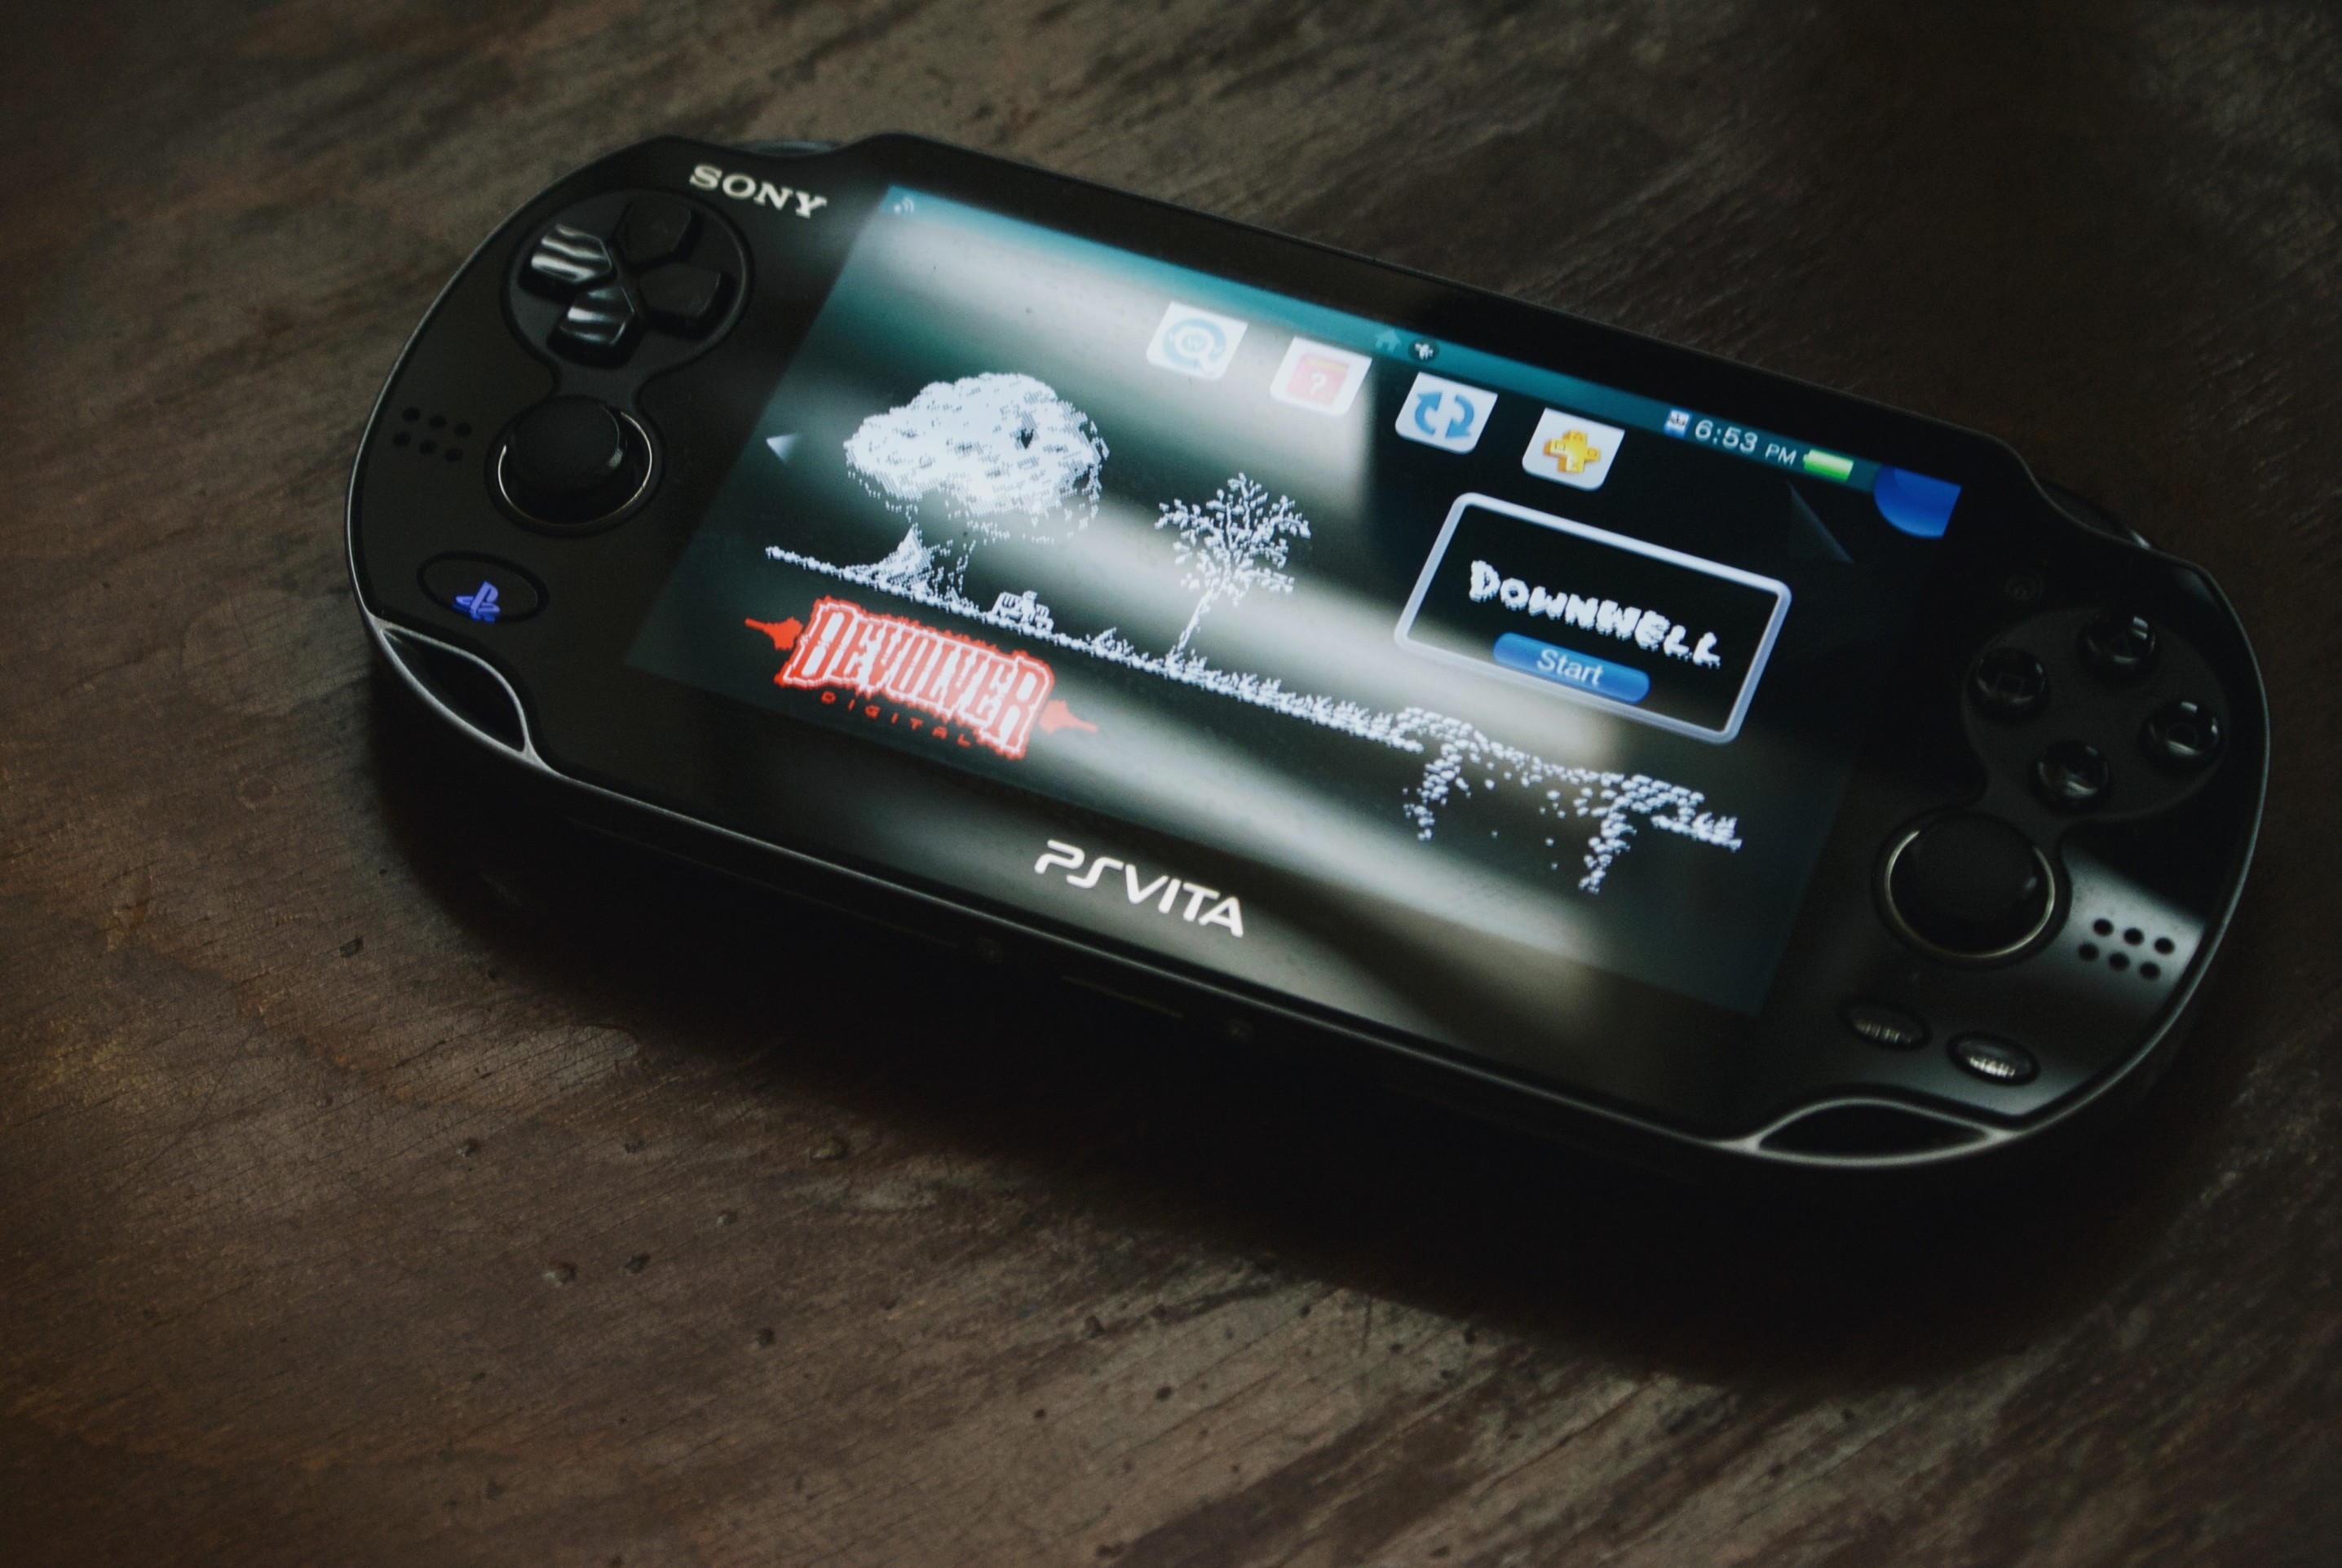 Gta 6 Date De Fin De Sortie Ps Vita La PS Vita est morte, les ambitions de Sony sur consoles portables aussi